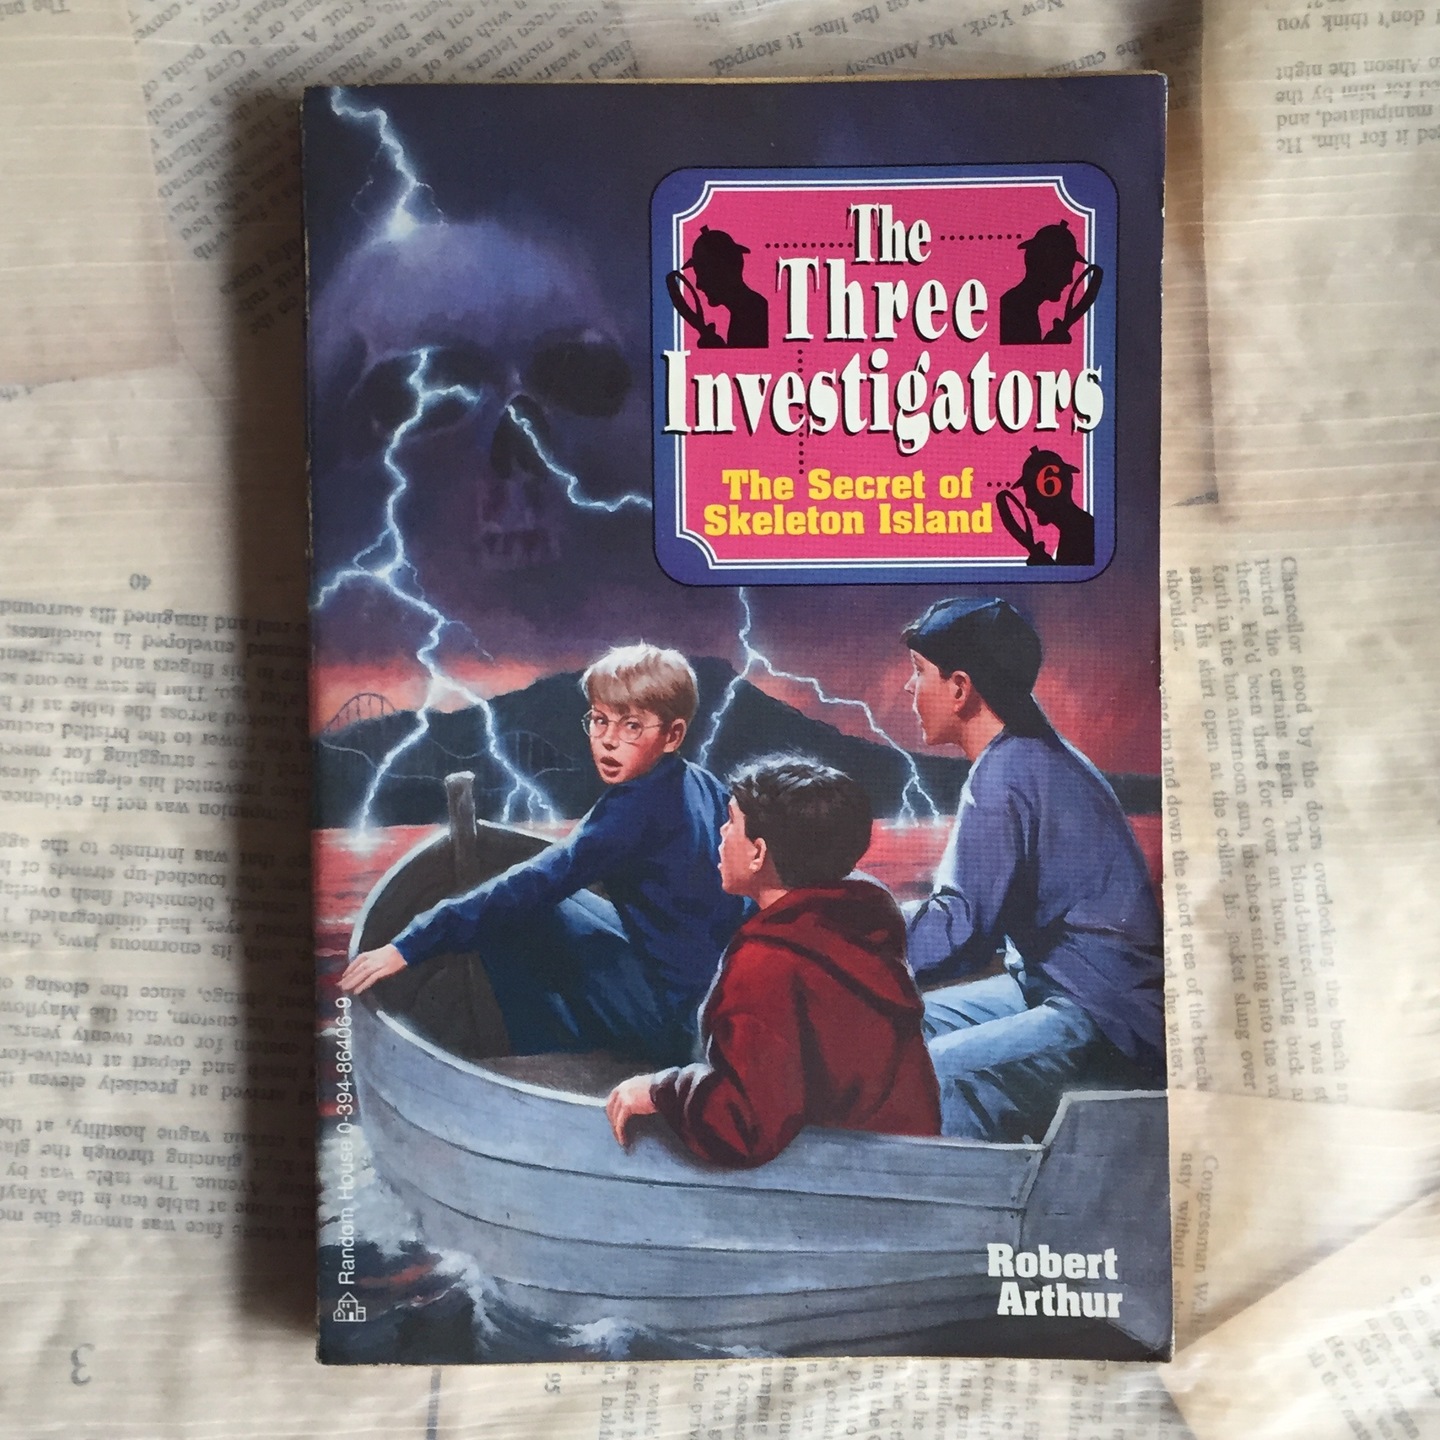 The Three Investigators: The Secret of Skeleton Island by Robert Arthur [Paperback]